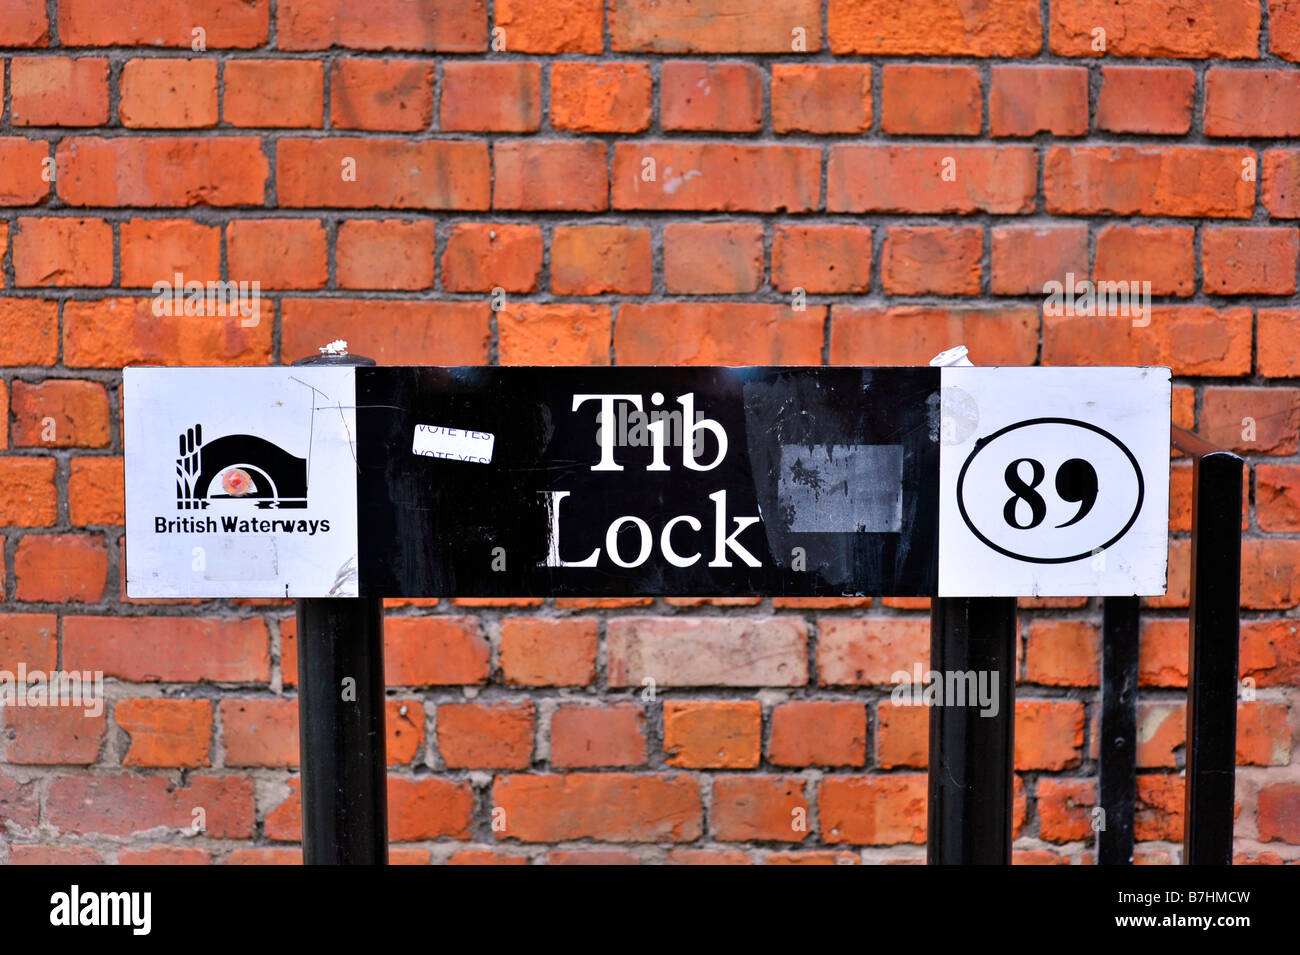 Tib Lock sign Manchester ship canal Stock Photo